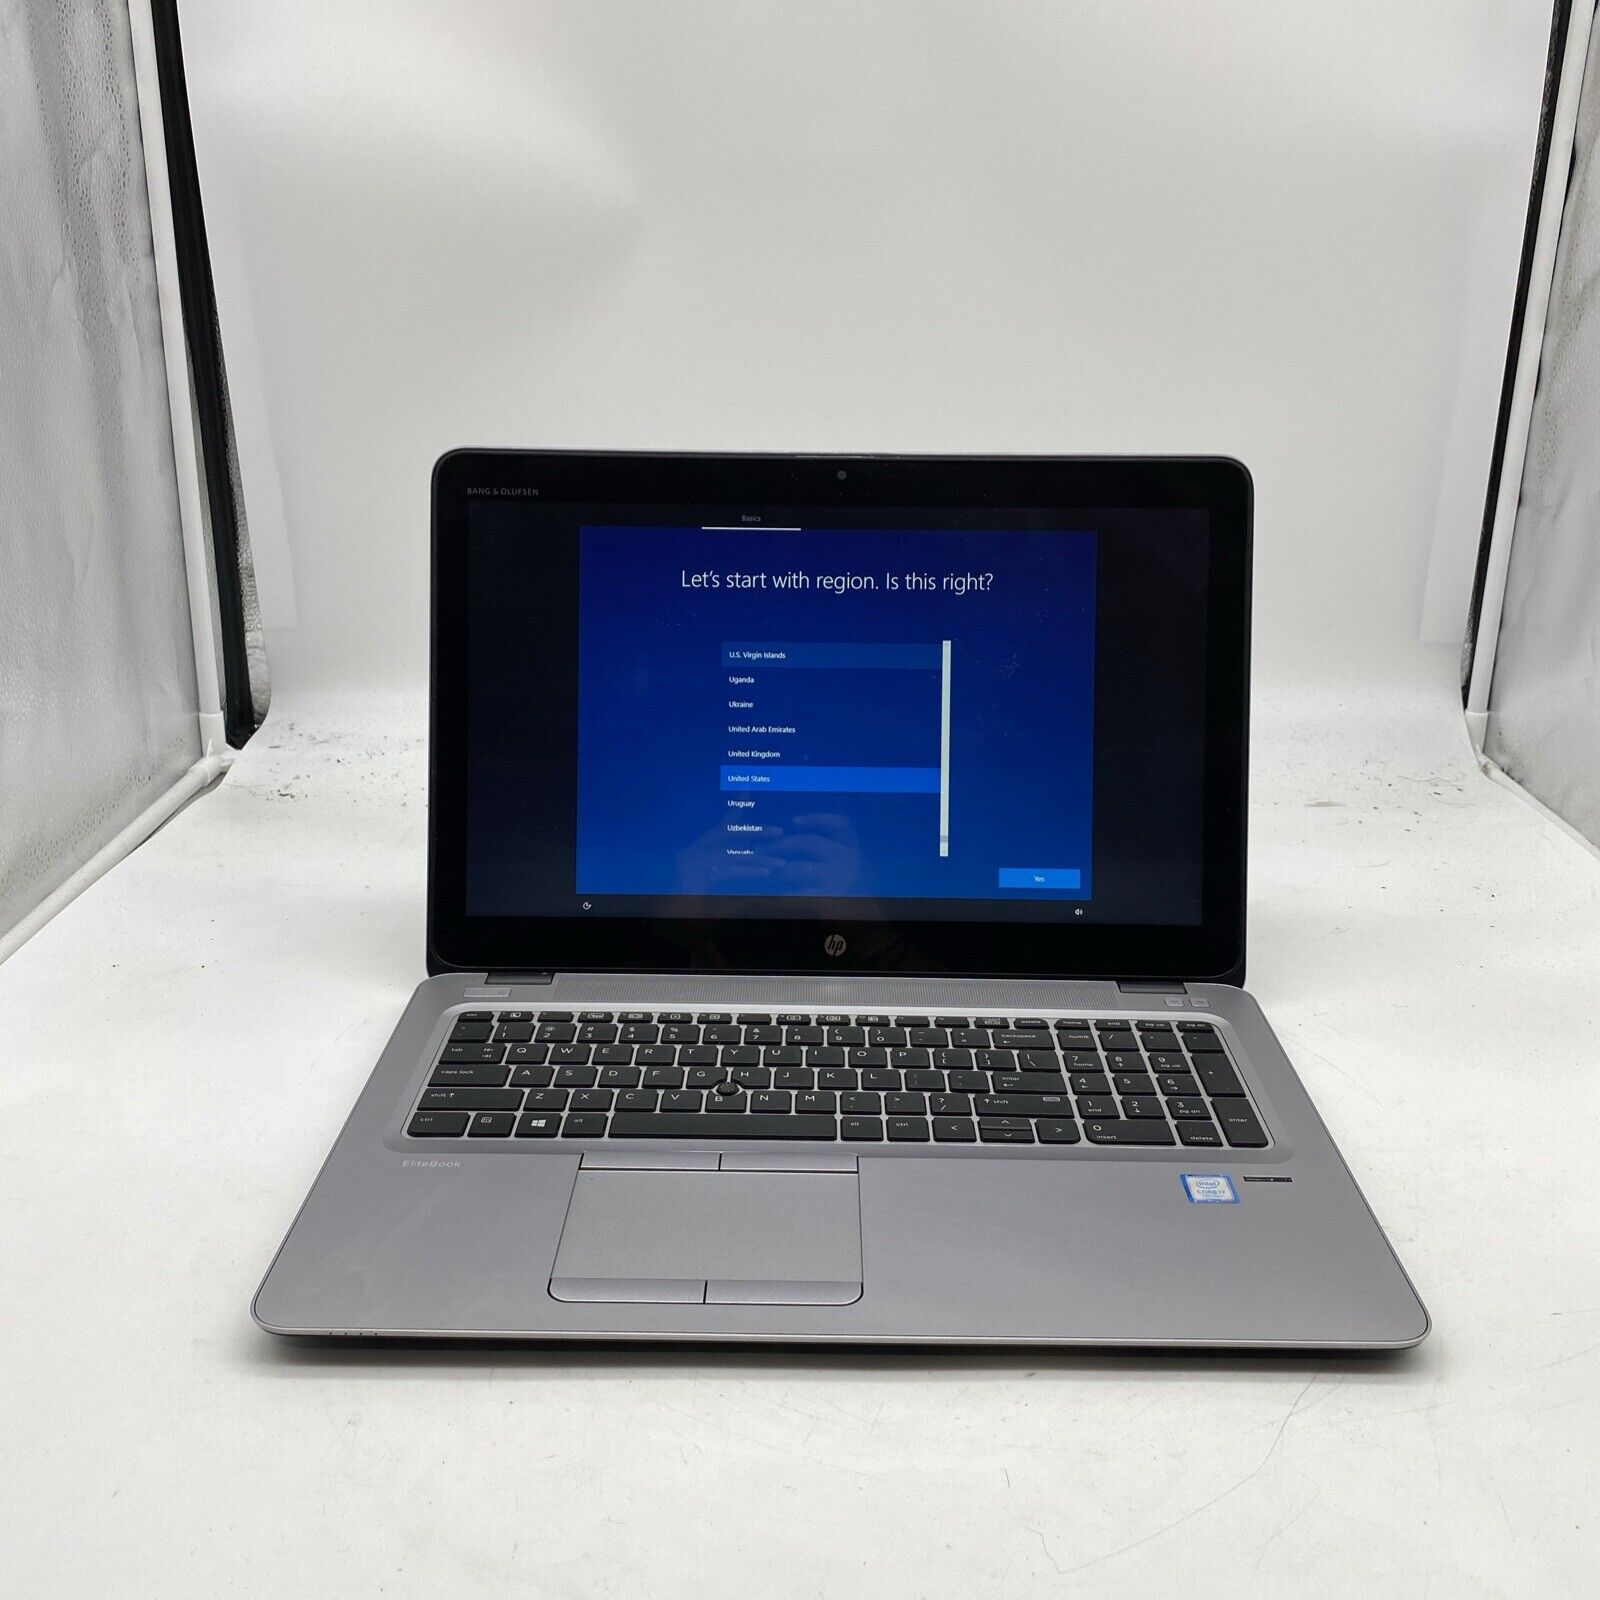 HP EliteBook 850 G4 Laptop Intel I7-7500U 2.7GHz 8GB RAM 256GB SSD W10P Touch